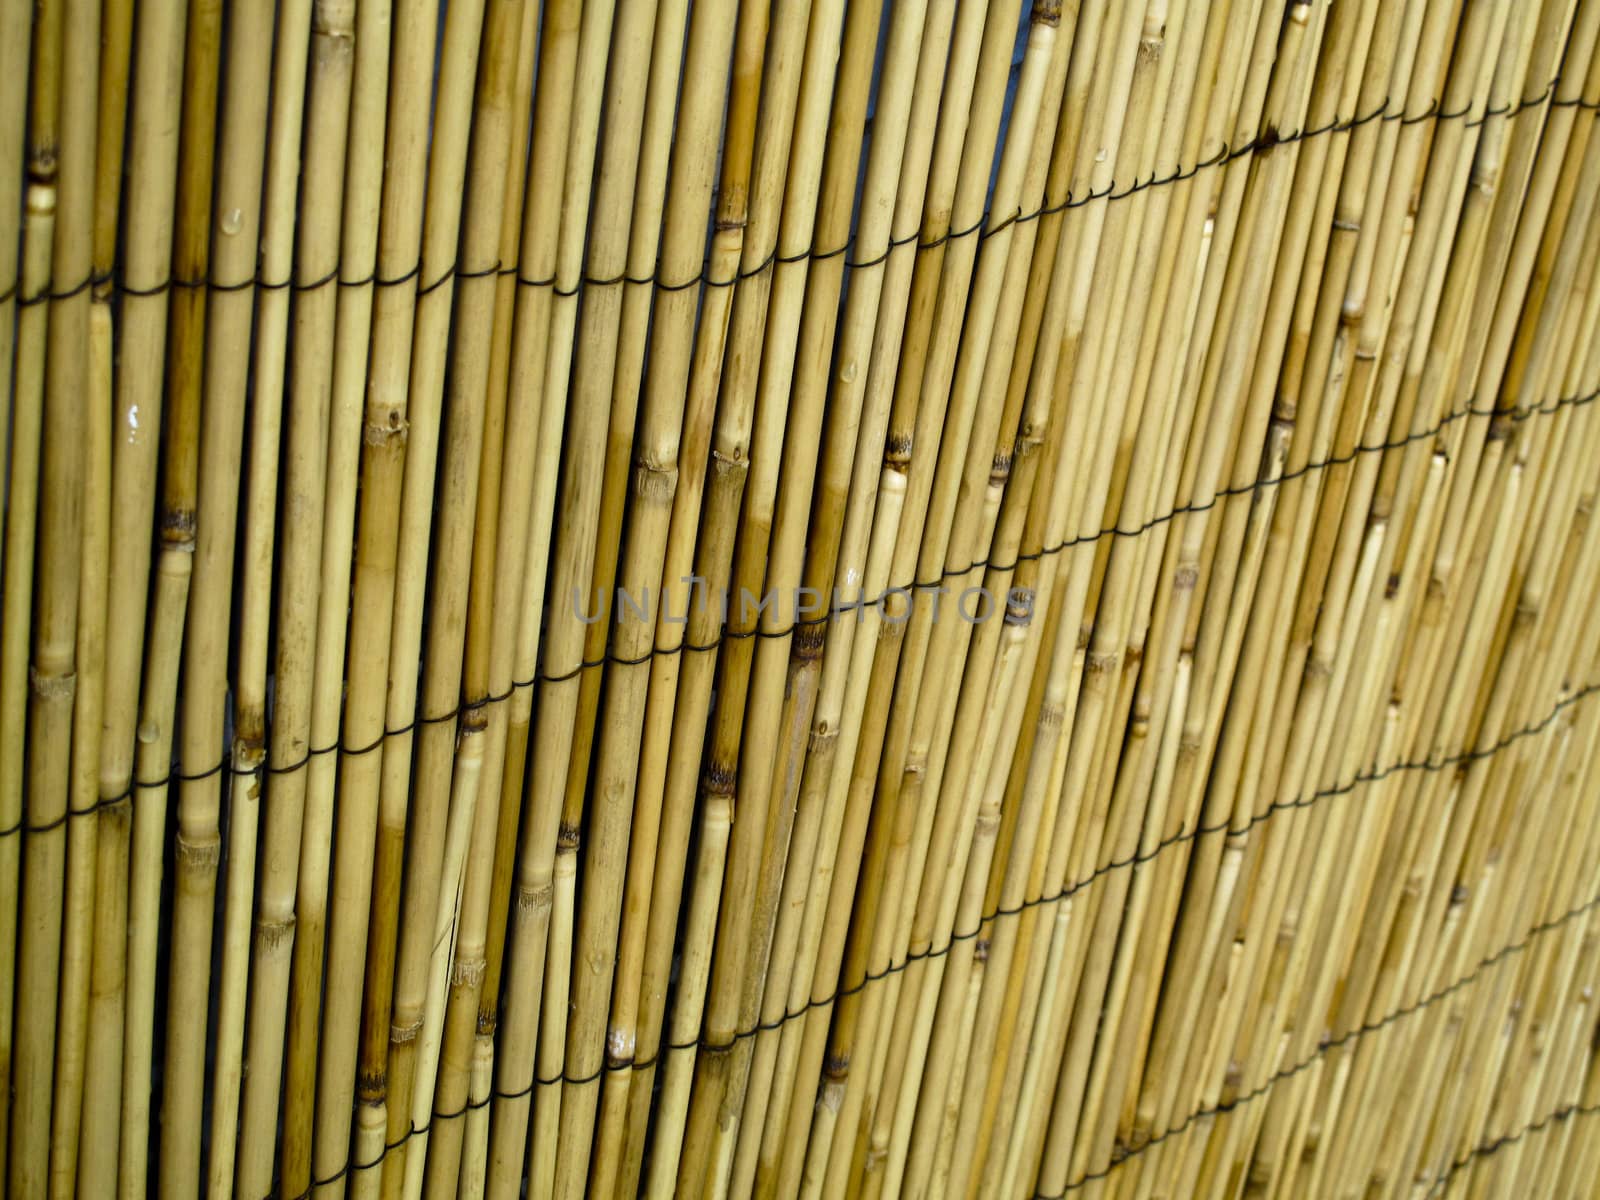 Bamboo Fence by ADavis